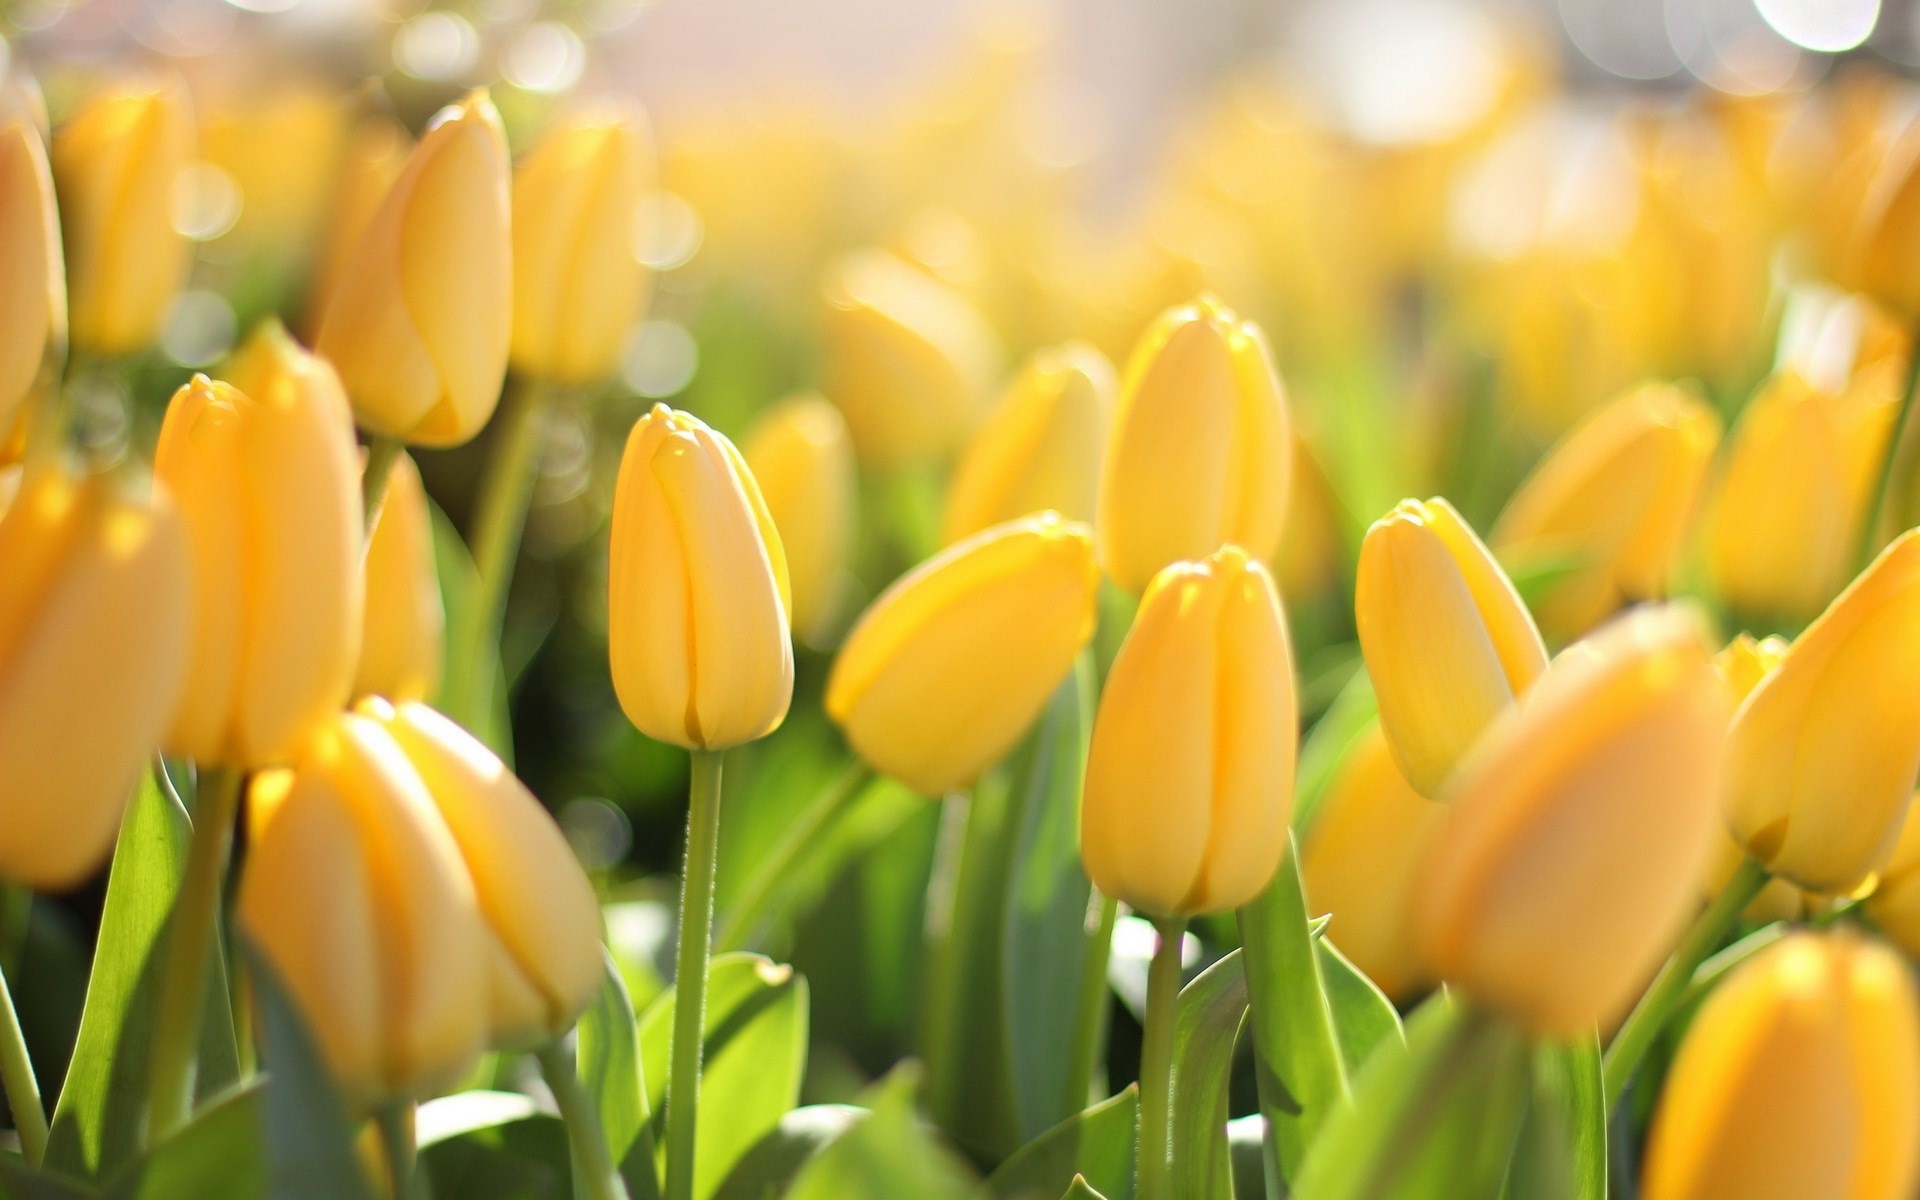 Morning sun shine on tulip flowers garden - New hd wallpaperNew hd ...